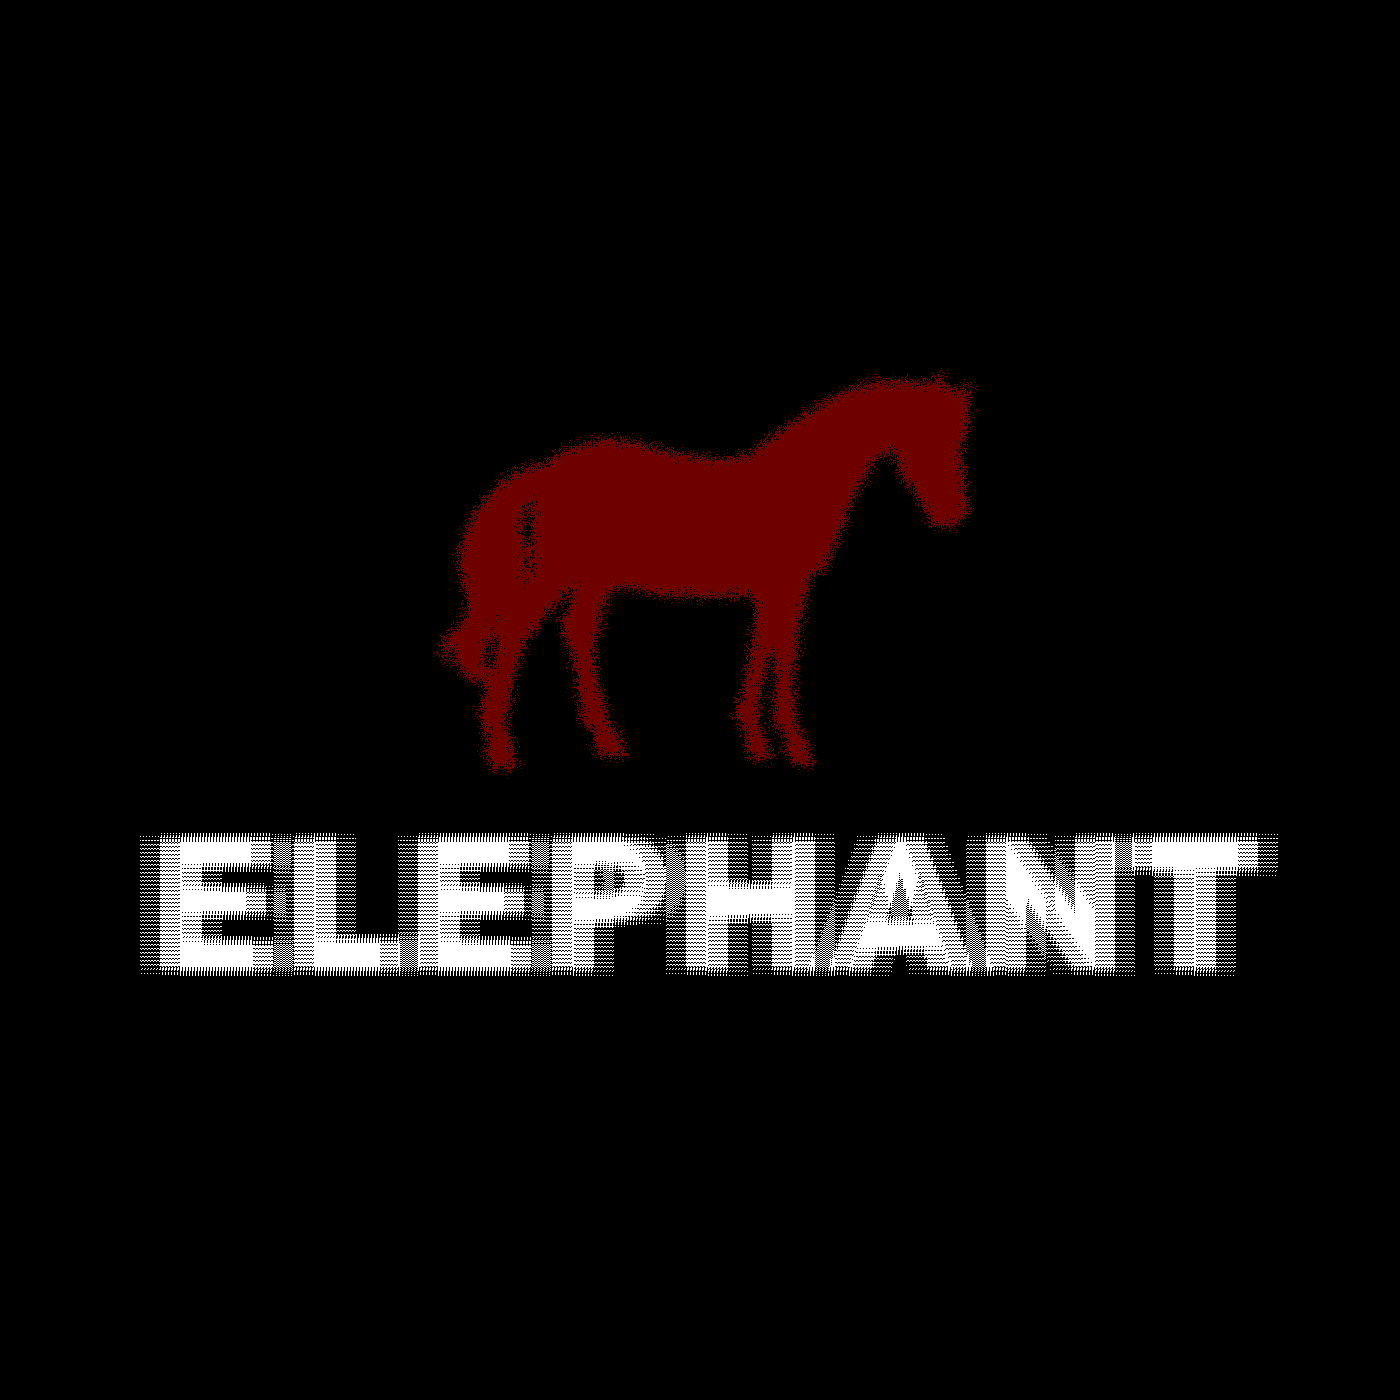 ELEPHANT art film productions